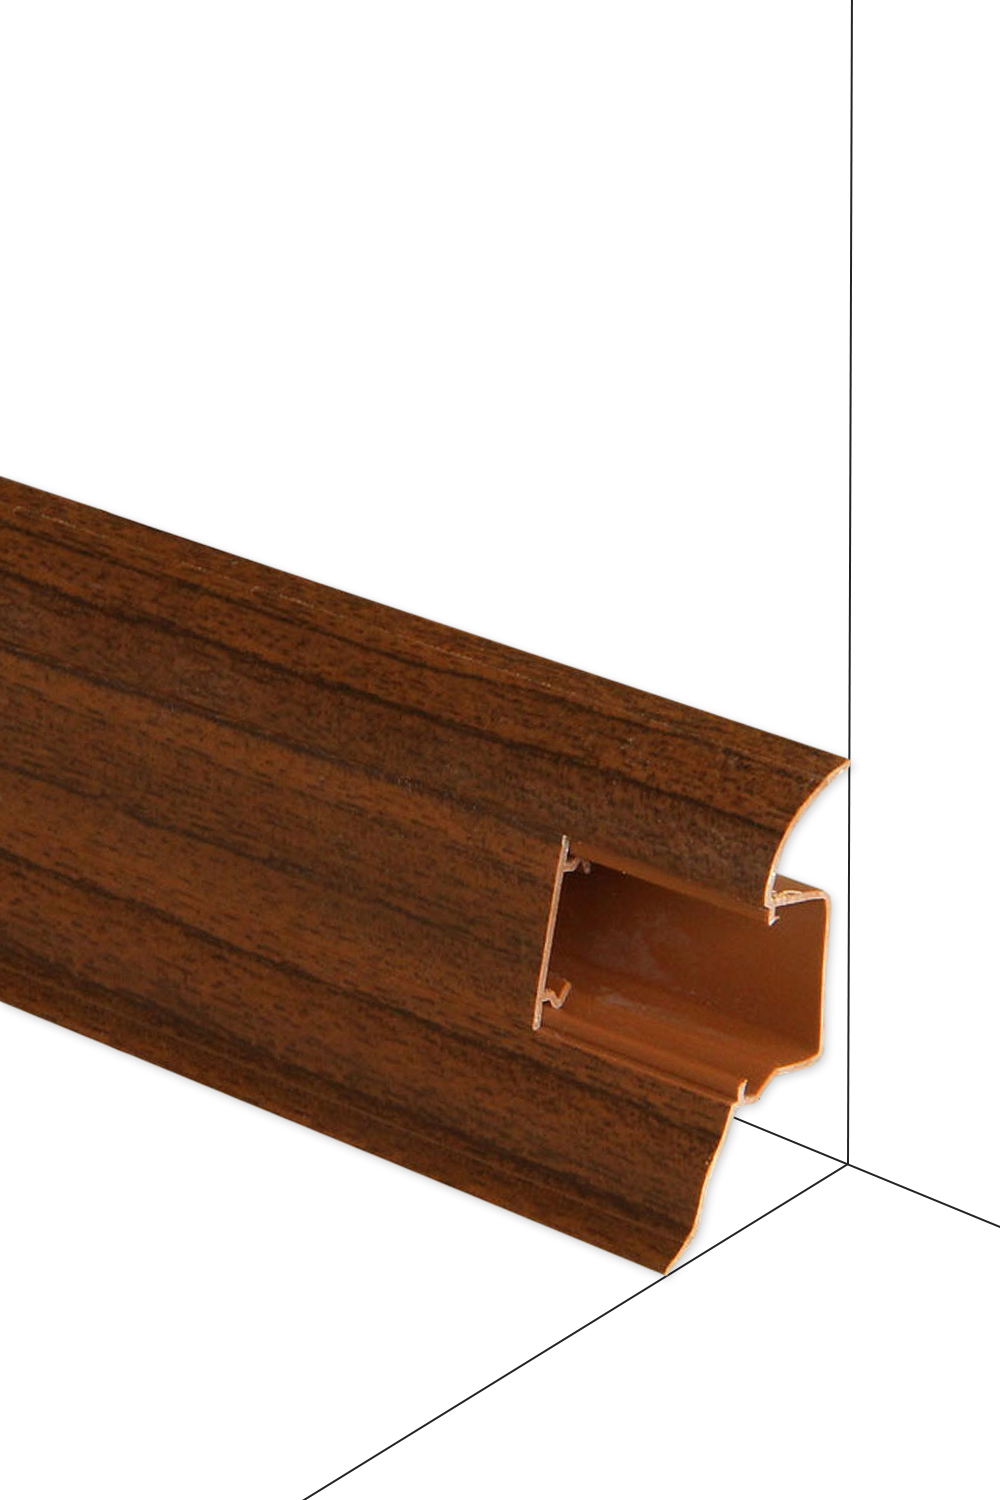 Podlahová lišta DOLLKEN W139 Orech - dĺžka 250 cm Roh vnútorný 